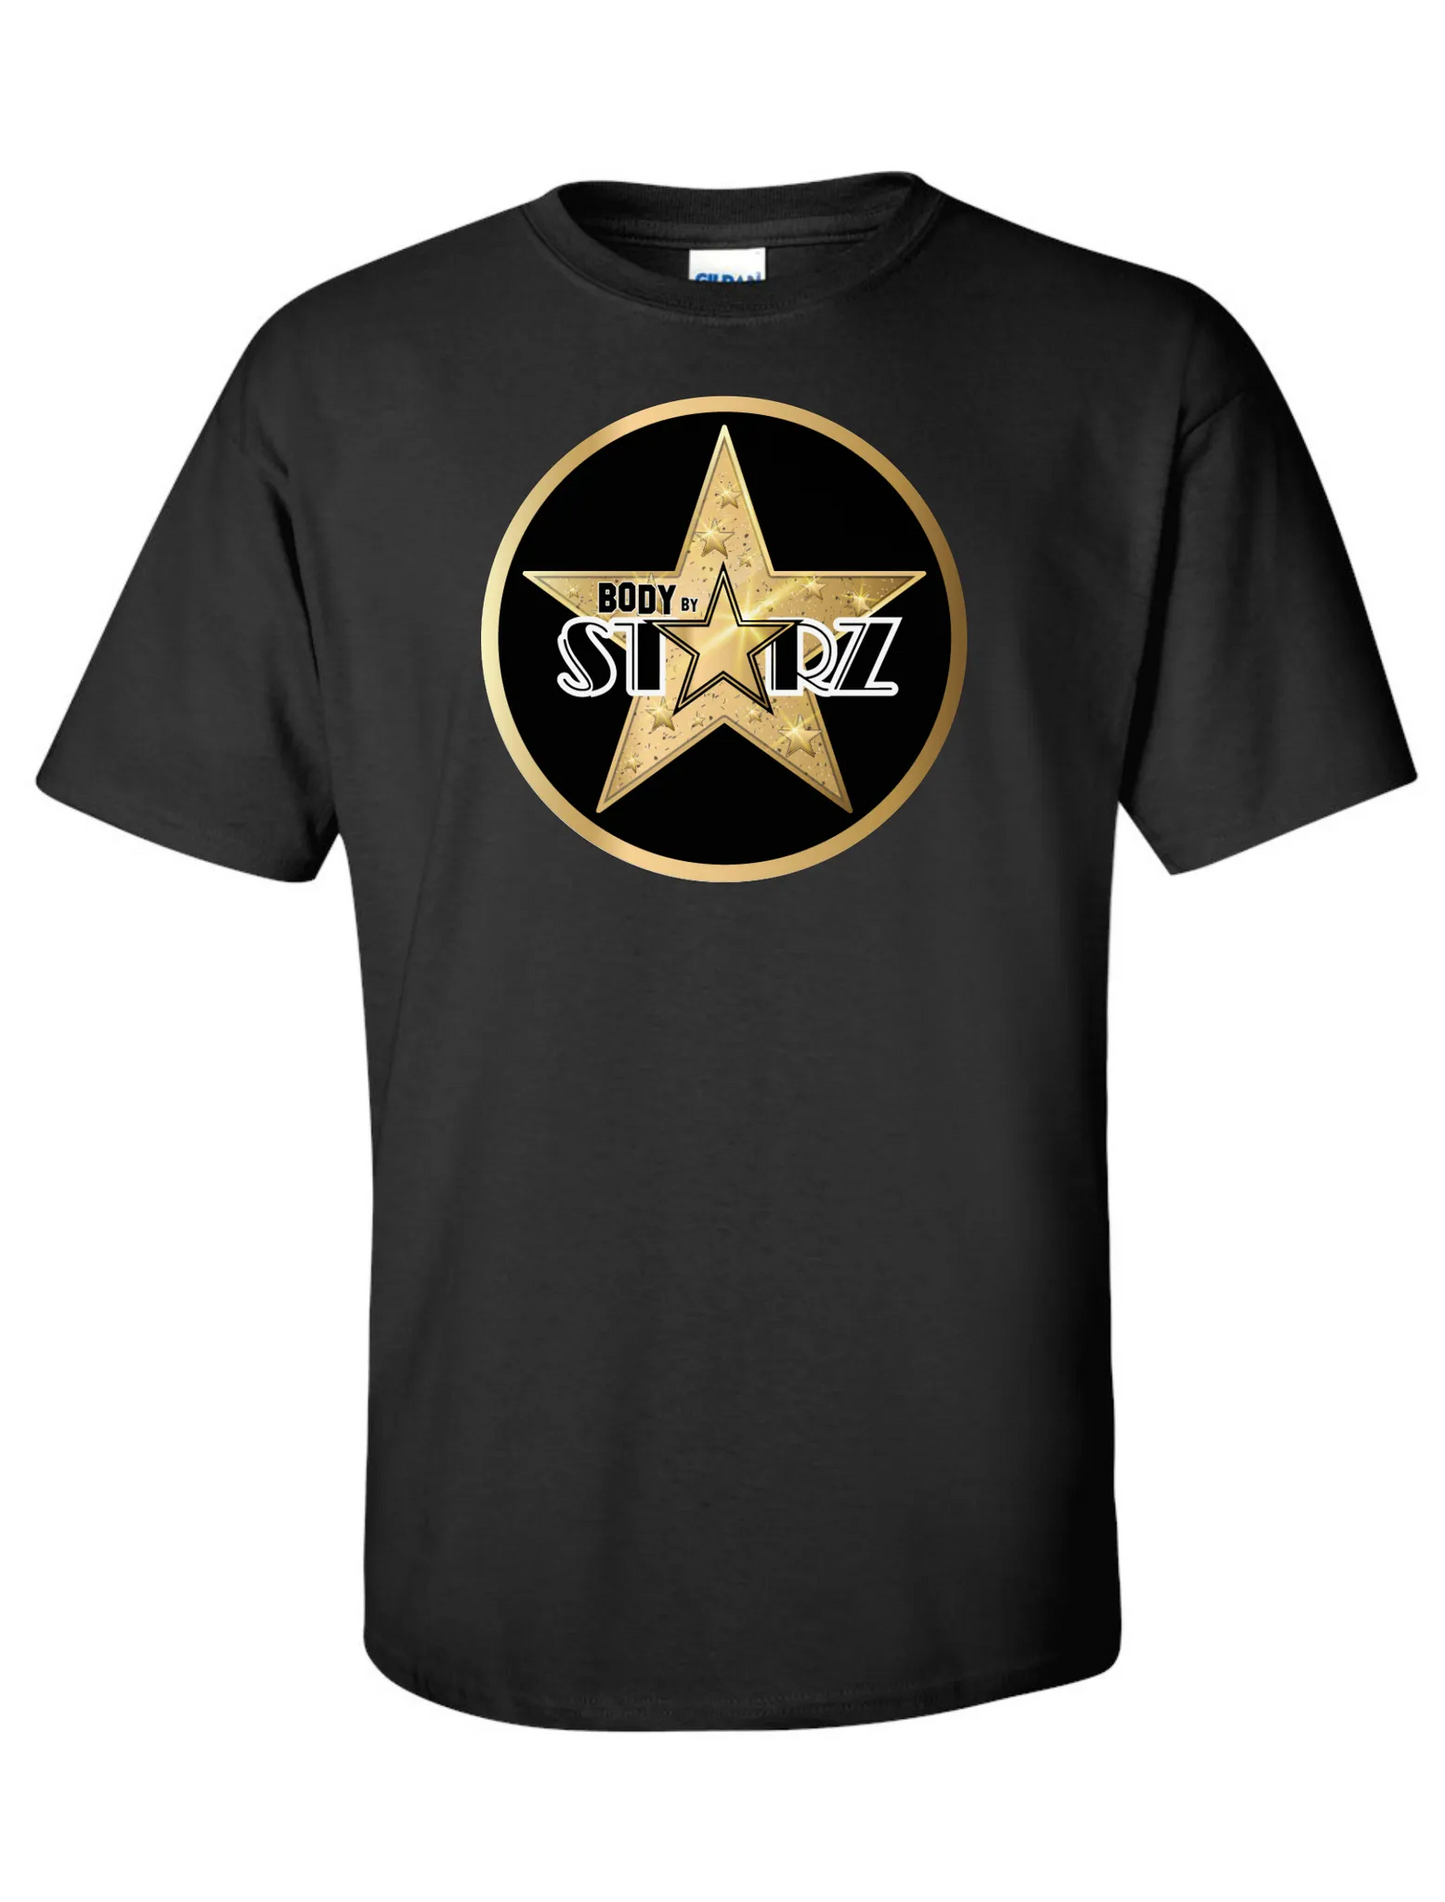 Body By Starz Men's Black T-Shirt